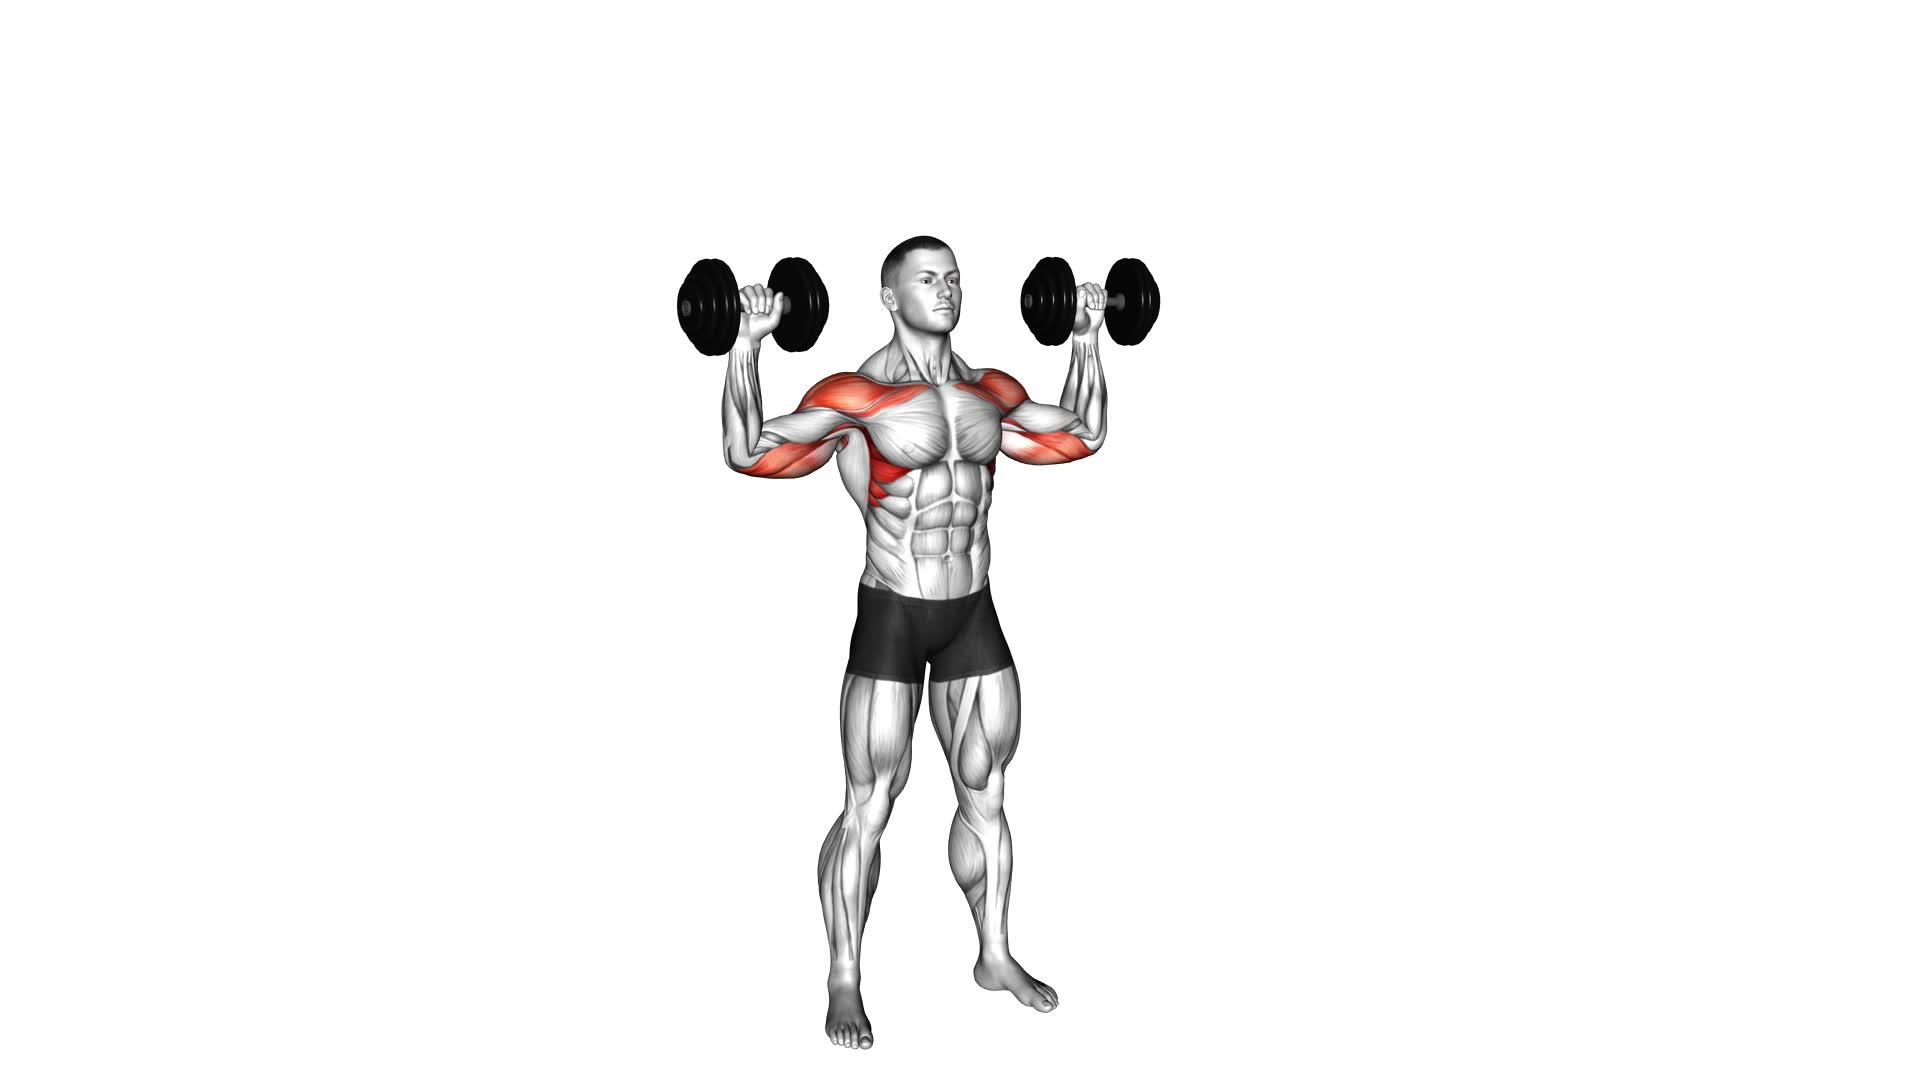 Dumbbell Alternate Shoulder Press (male) - Video Exercise Guide & Tips